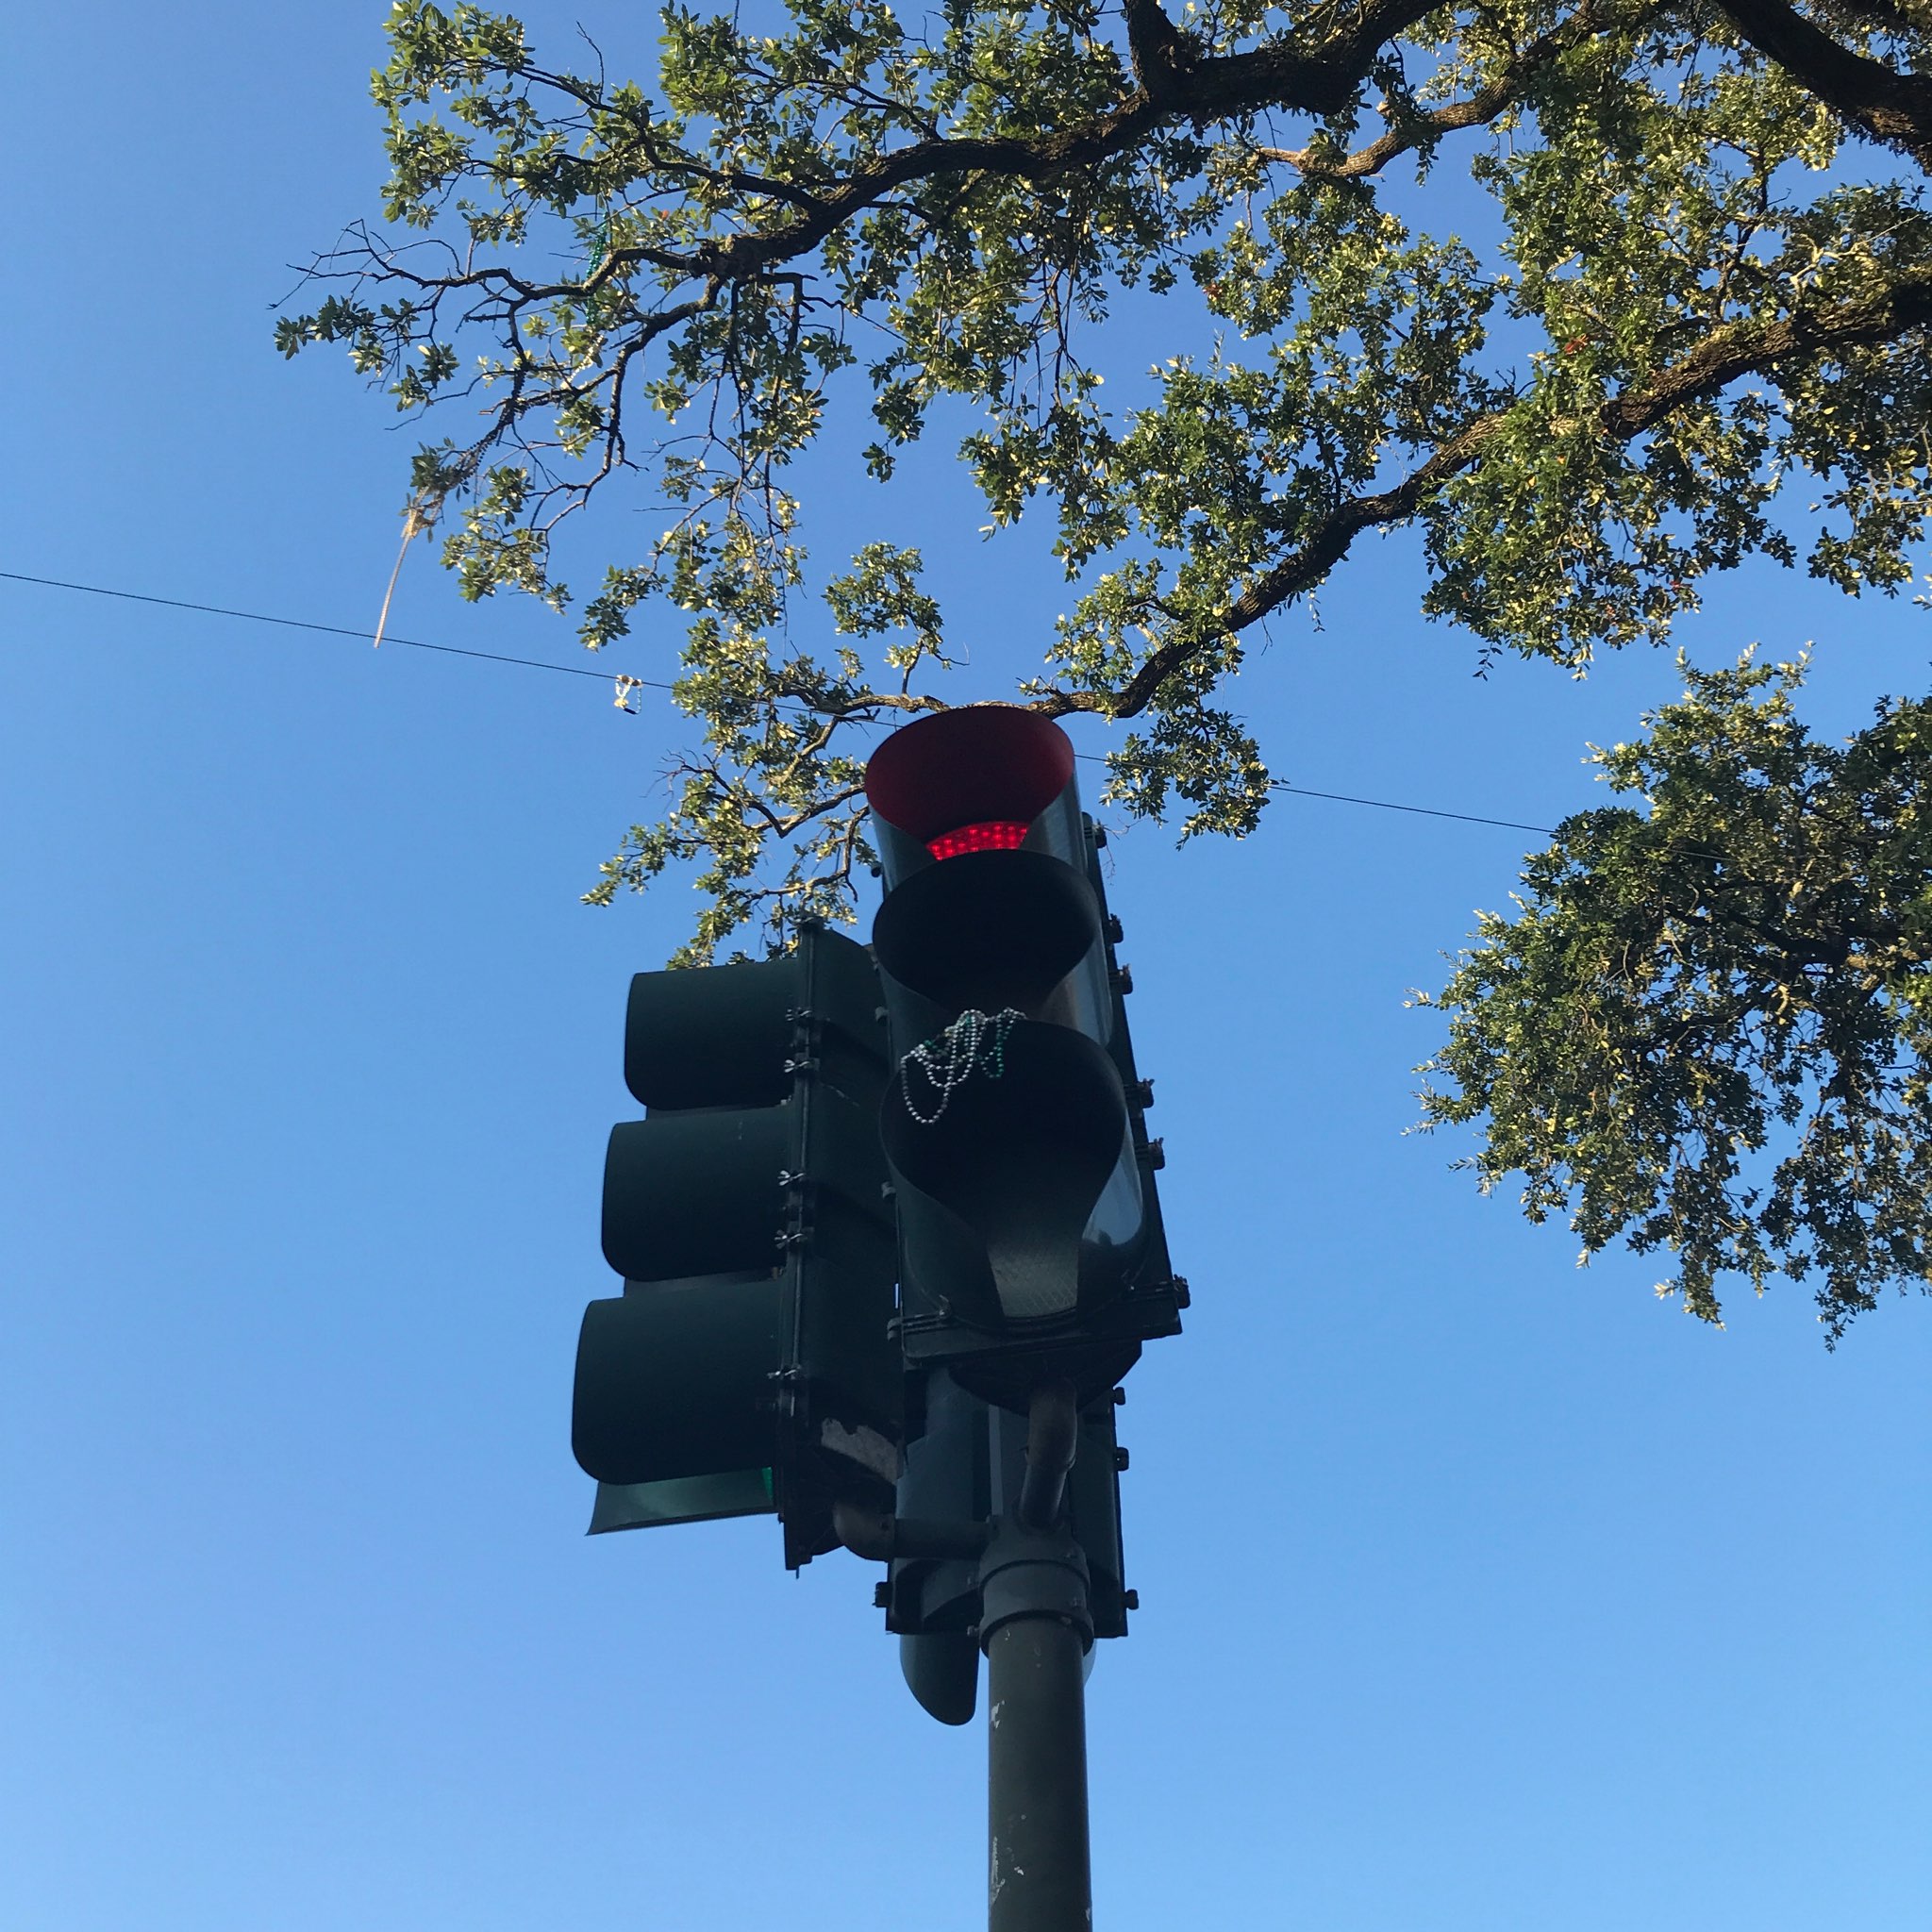 Red traffic light adorned in Mardi Gras throws